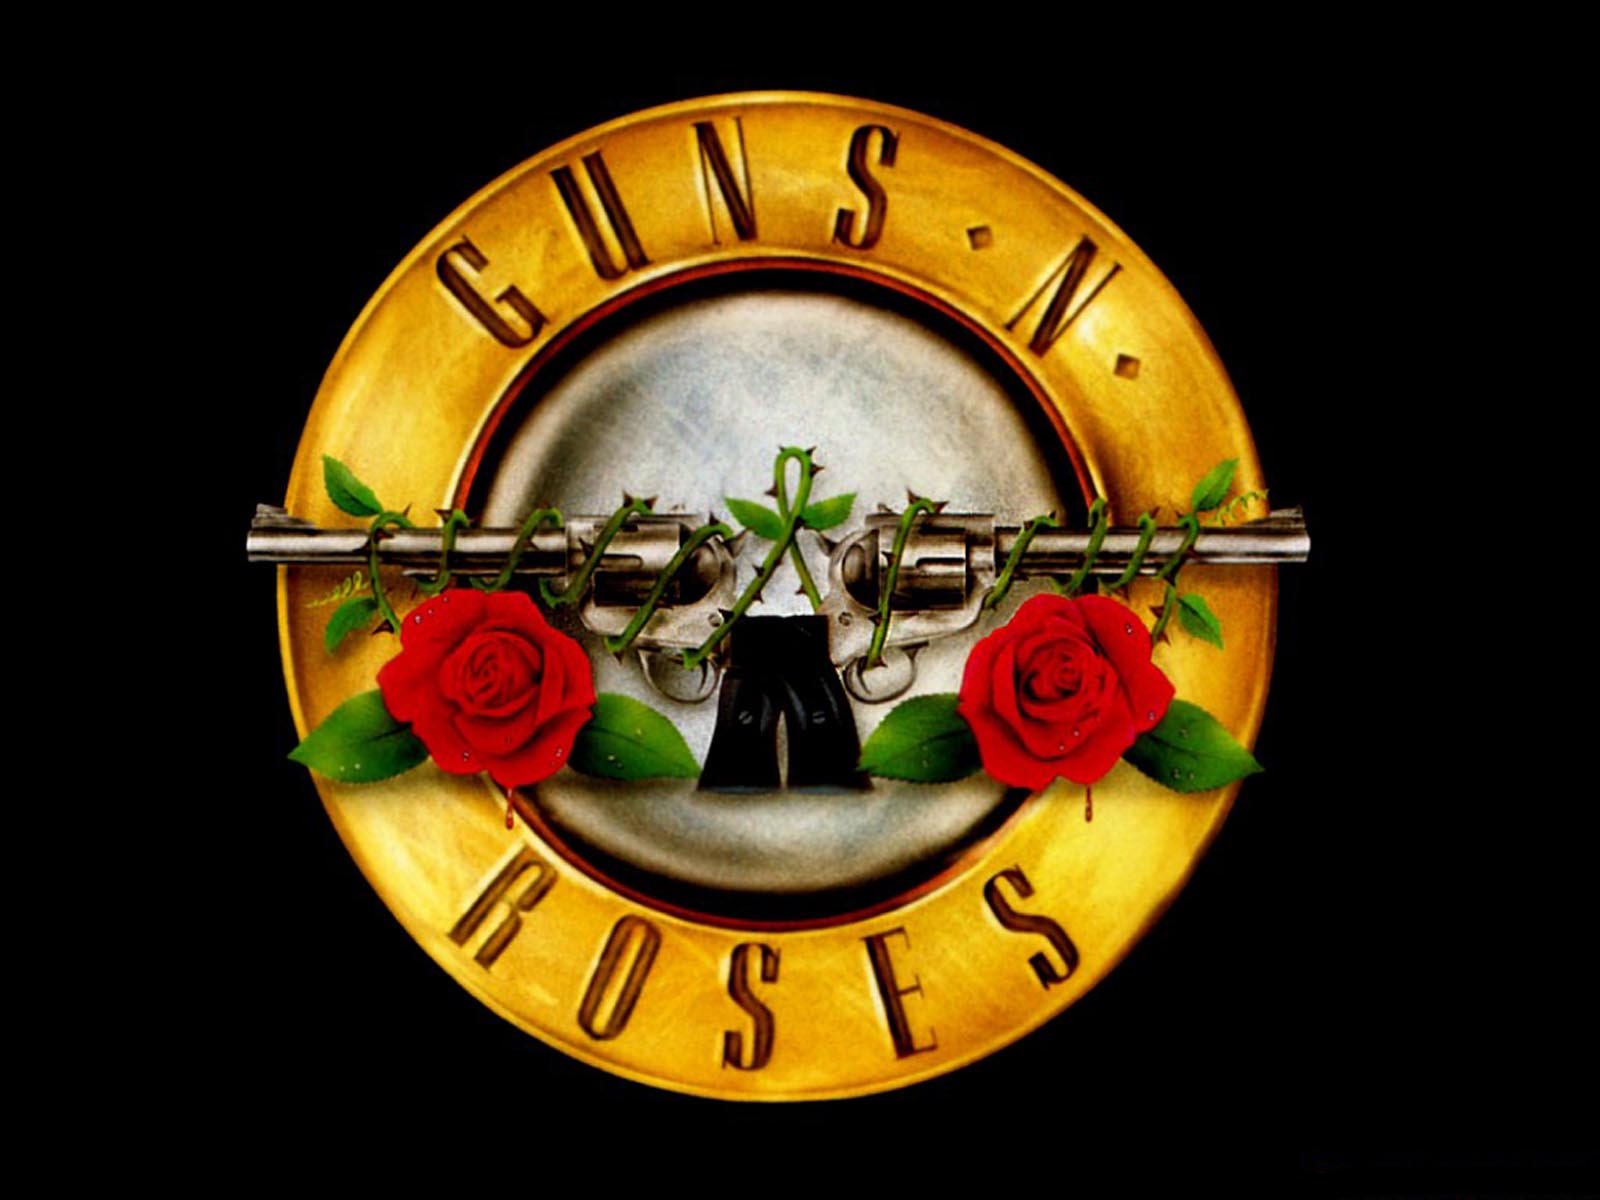 Guns N Roses Wallpaper Pictures